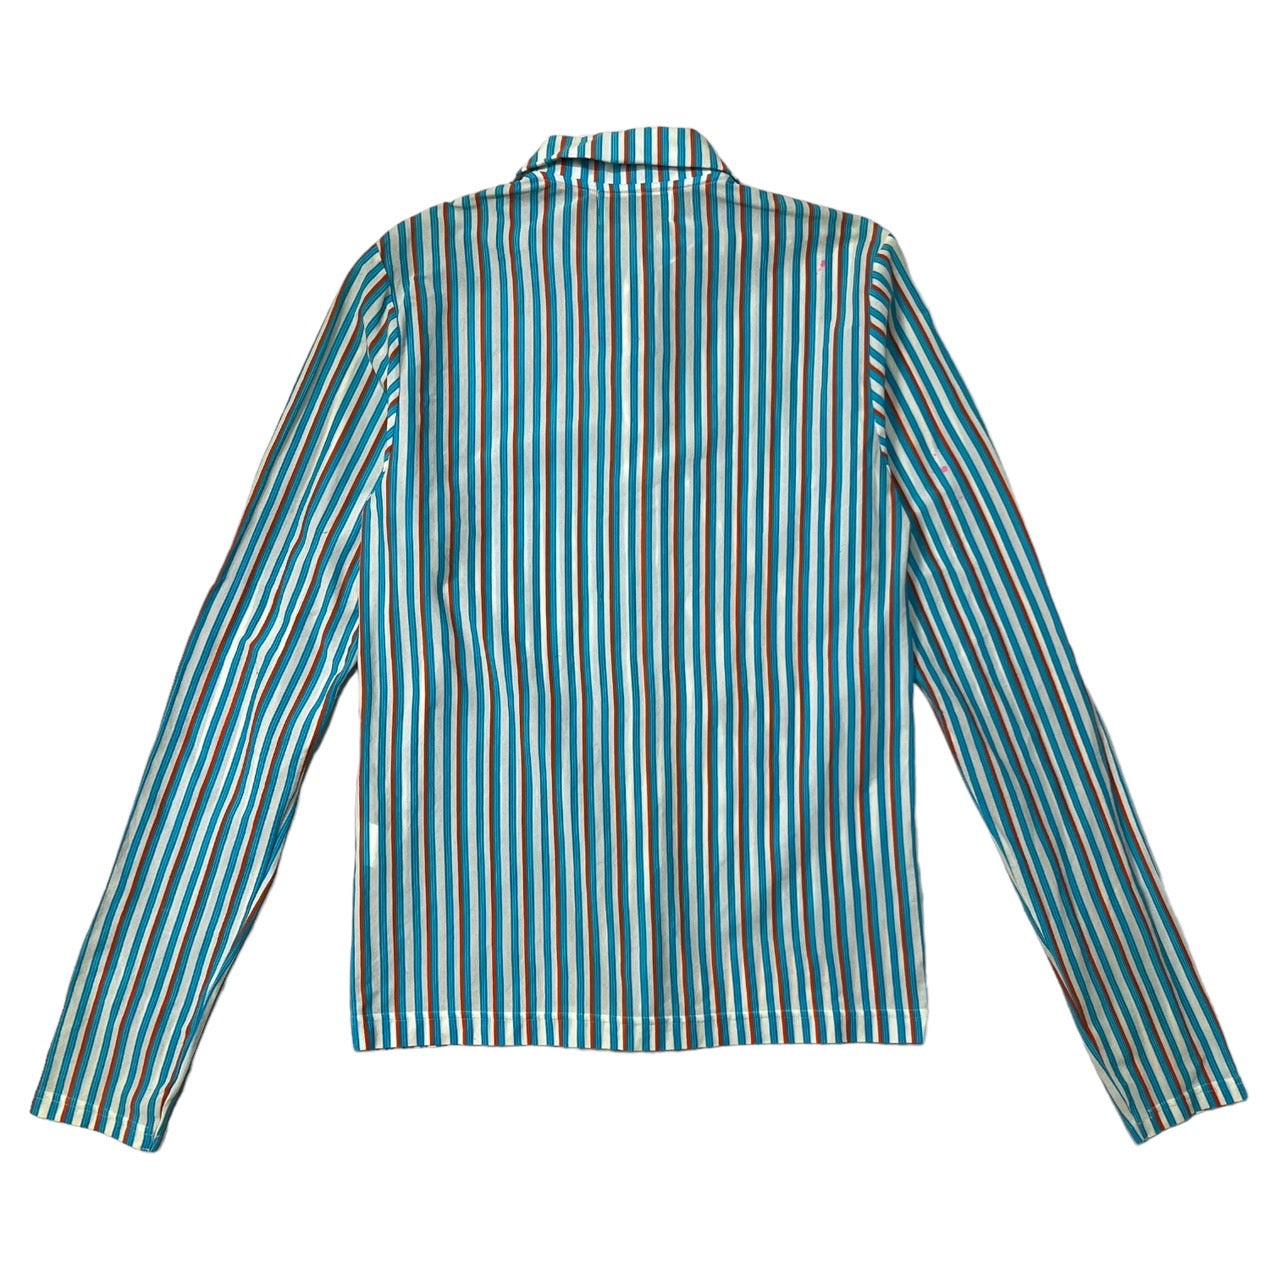 MASAKI MATSUSHIMA(マサキマツシマ) 00's Painted striped shirt ペンキ加工 ストレッチ ストライプシャツ  長袖 3(L程度) ホワイト×ブルー